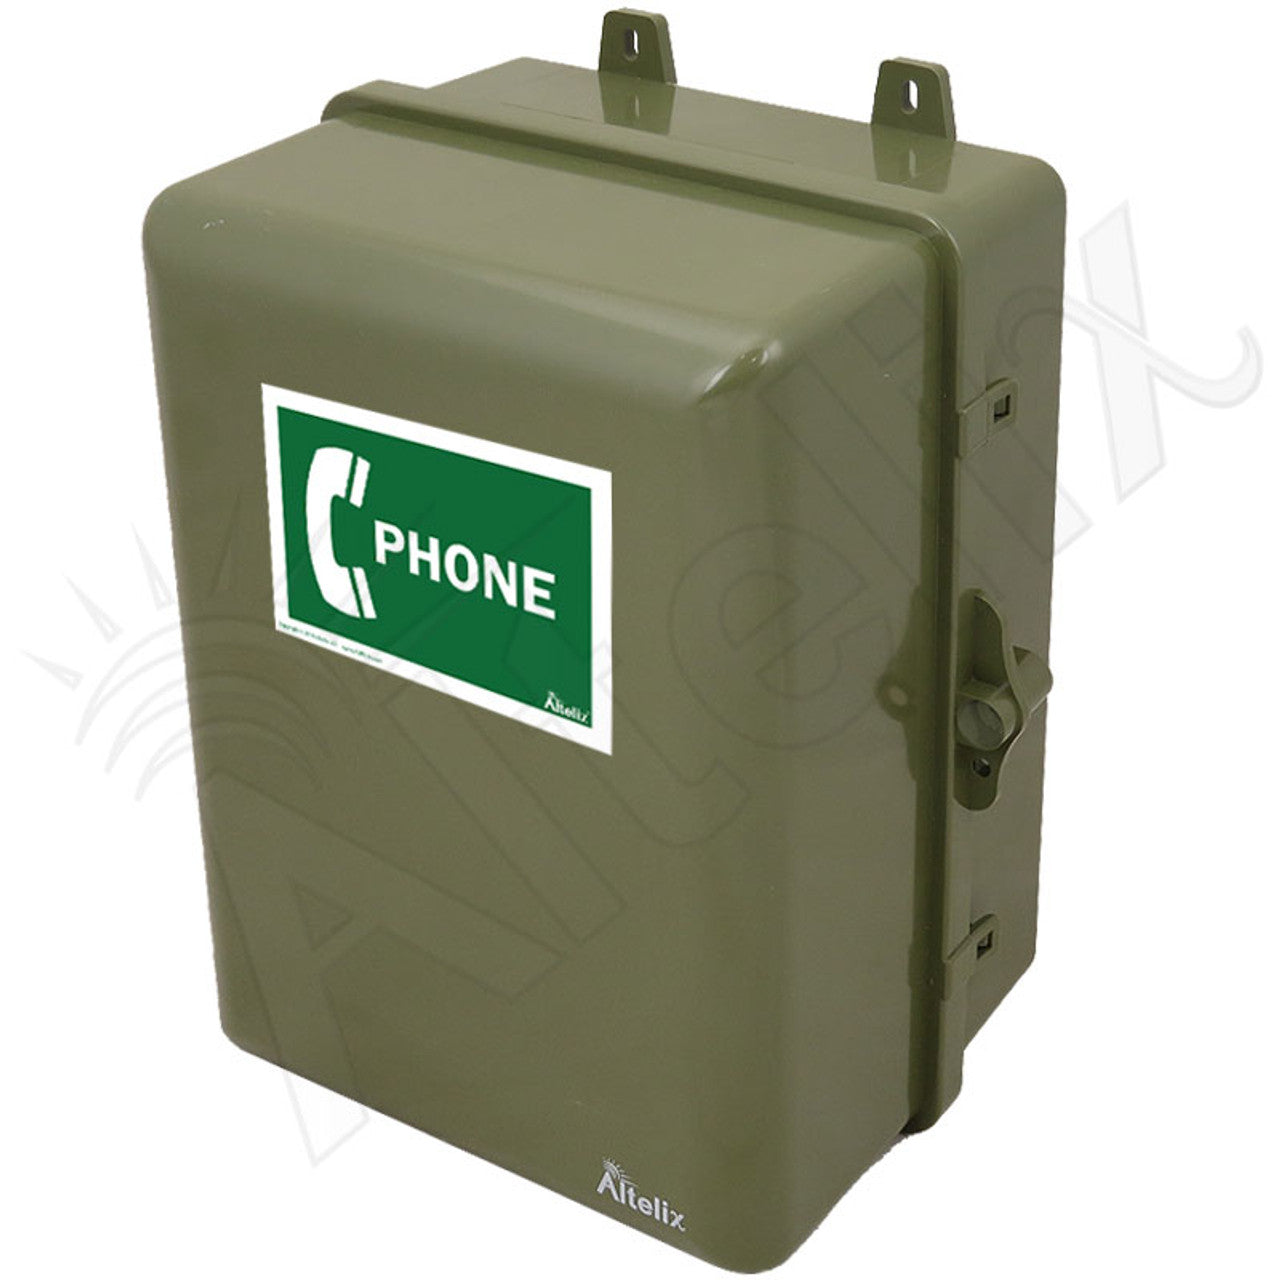 Altelix 12x9x7 IP66 NEMA 4X Outdoor Weatherproof Phone Call Box with Phone Label